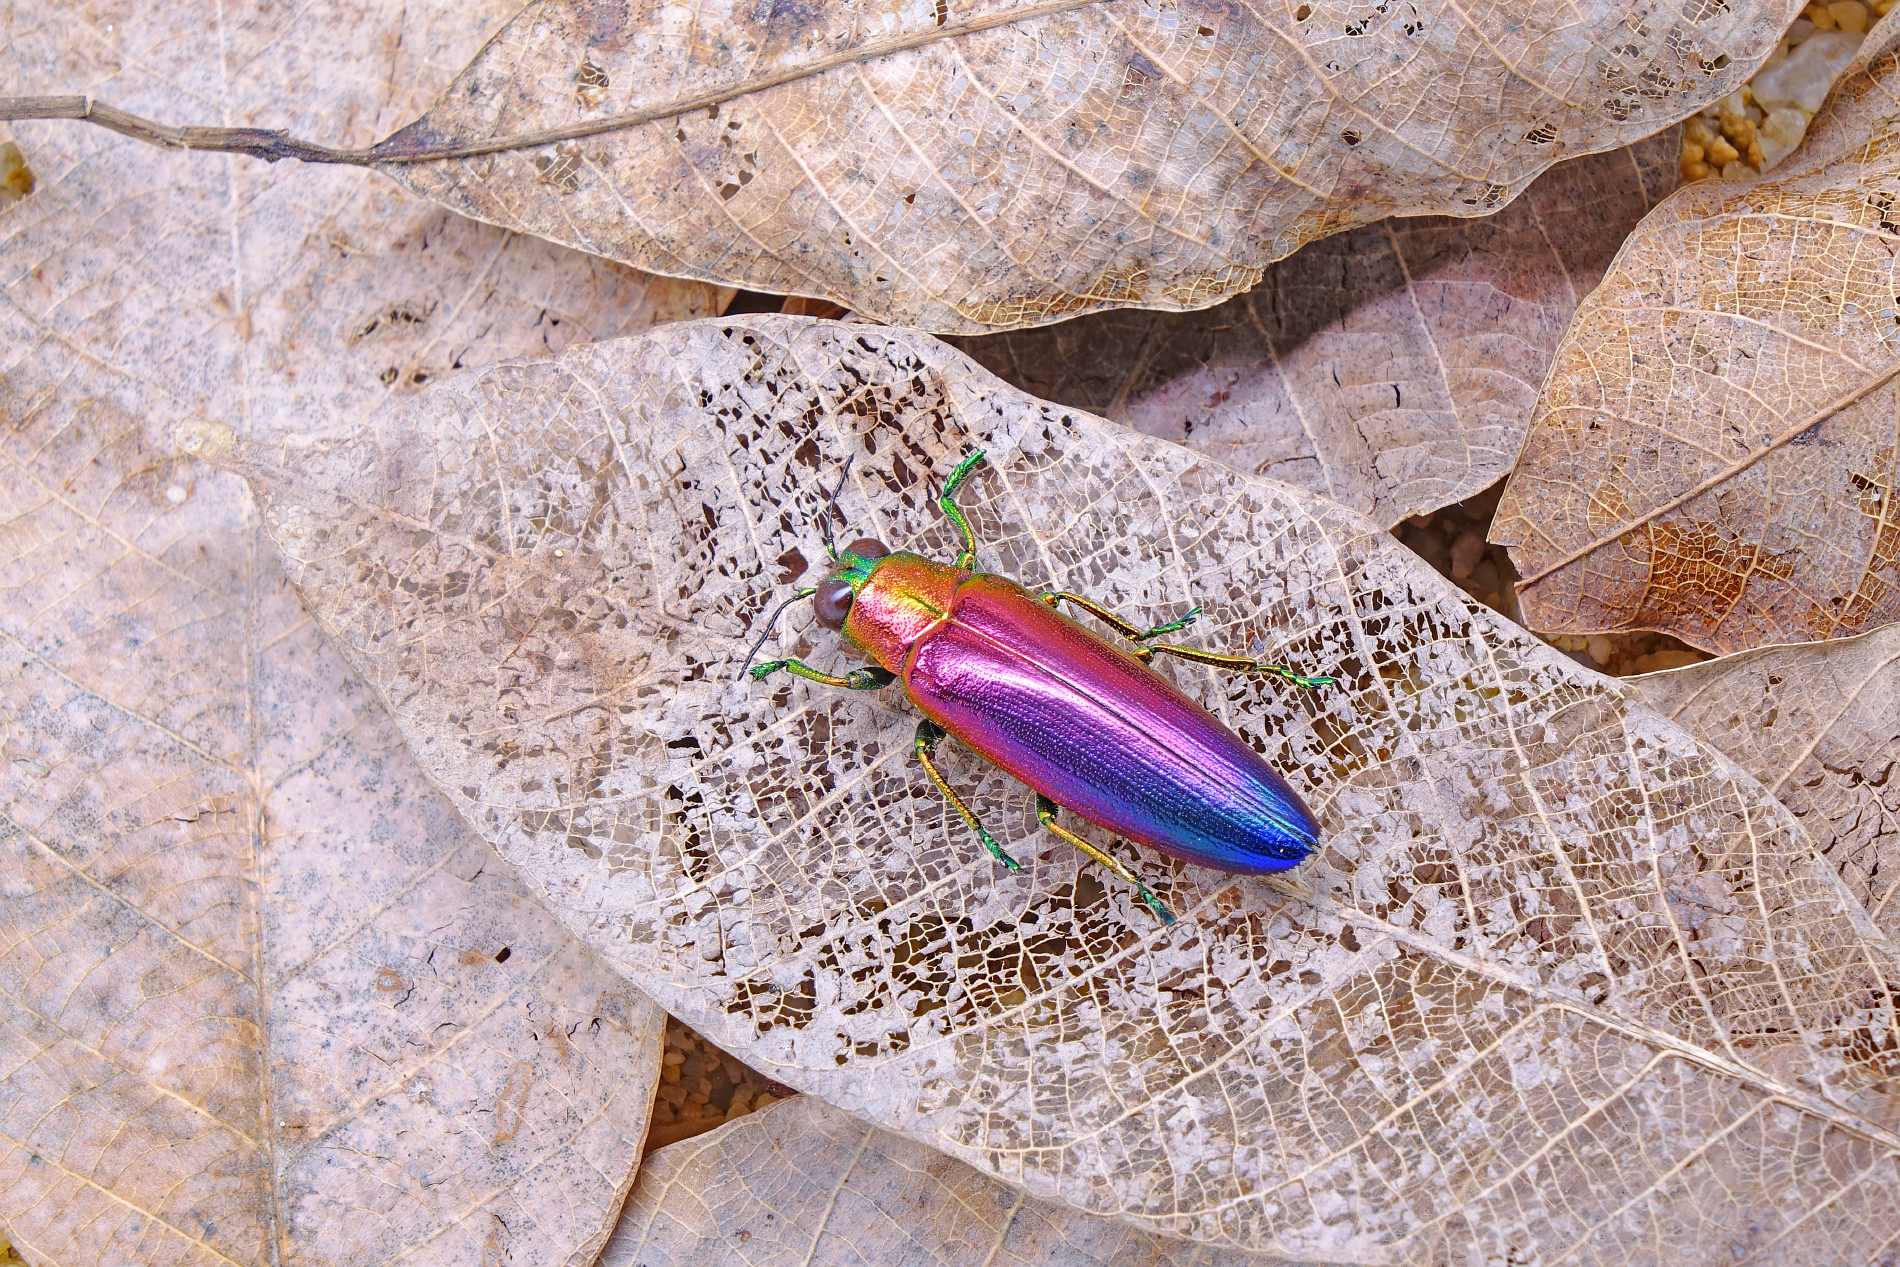 Jewel Beetles - Natural pieces of jewellery - Natural History Curiosities